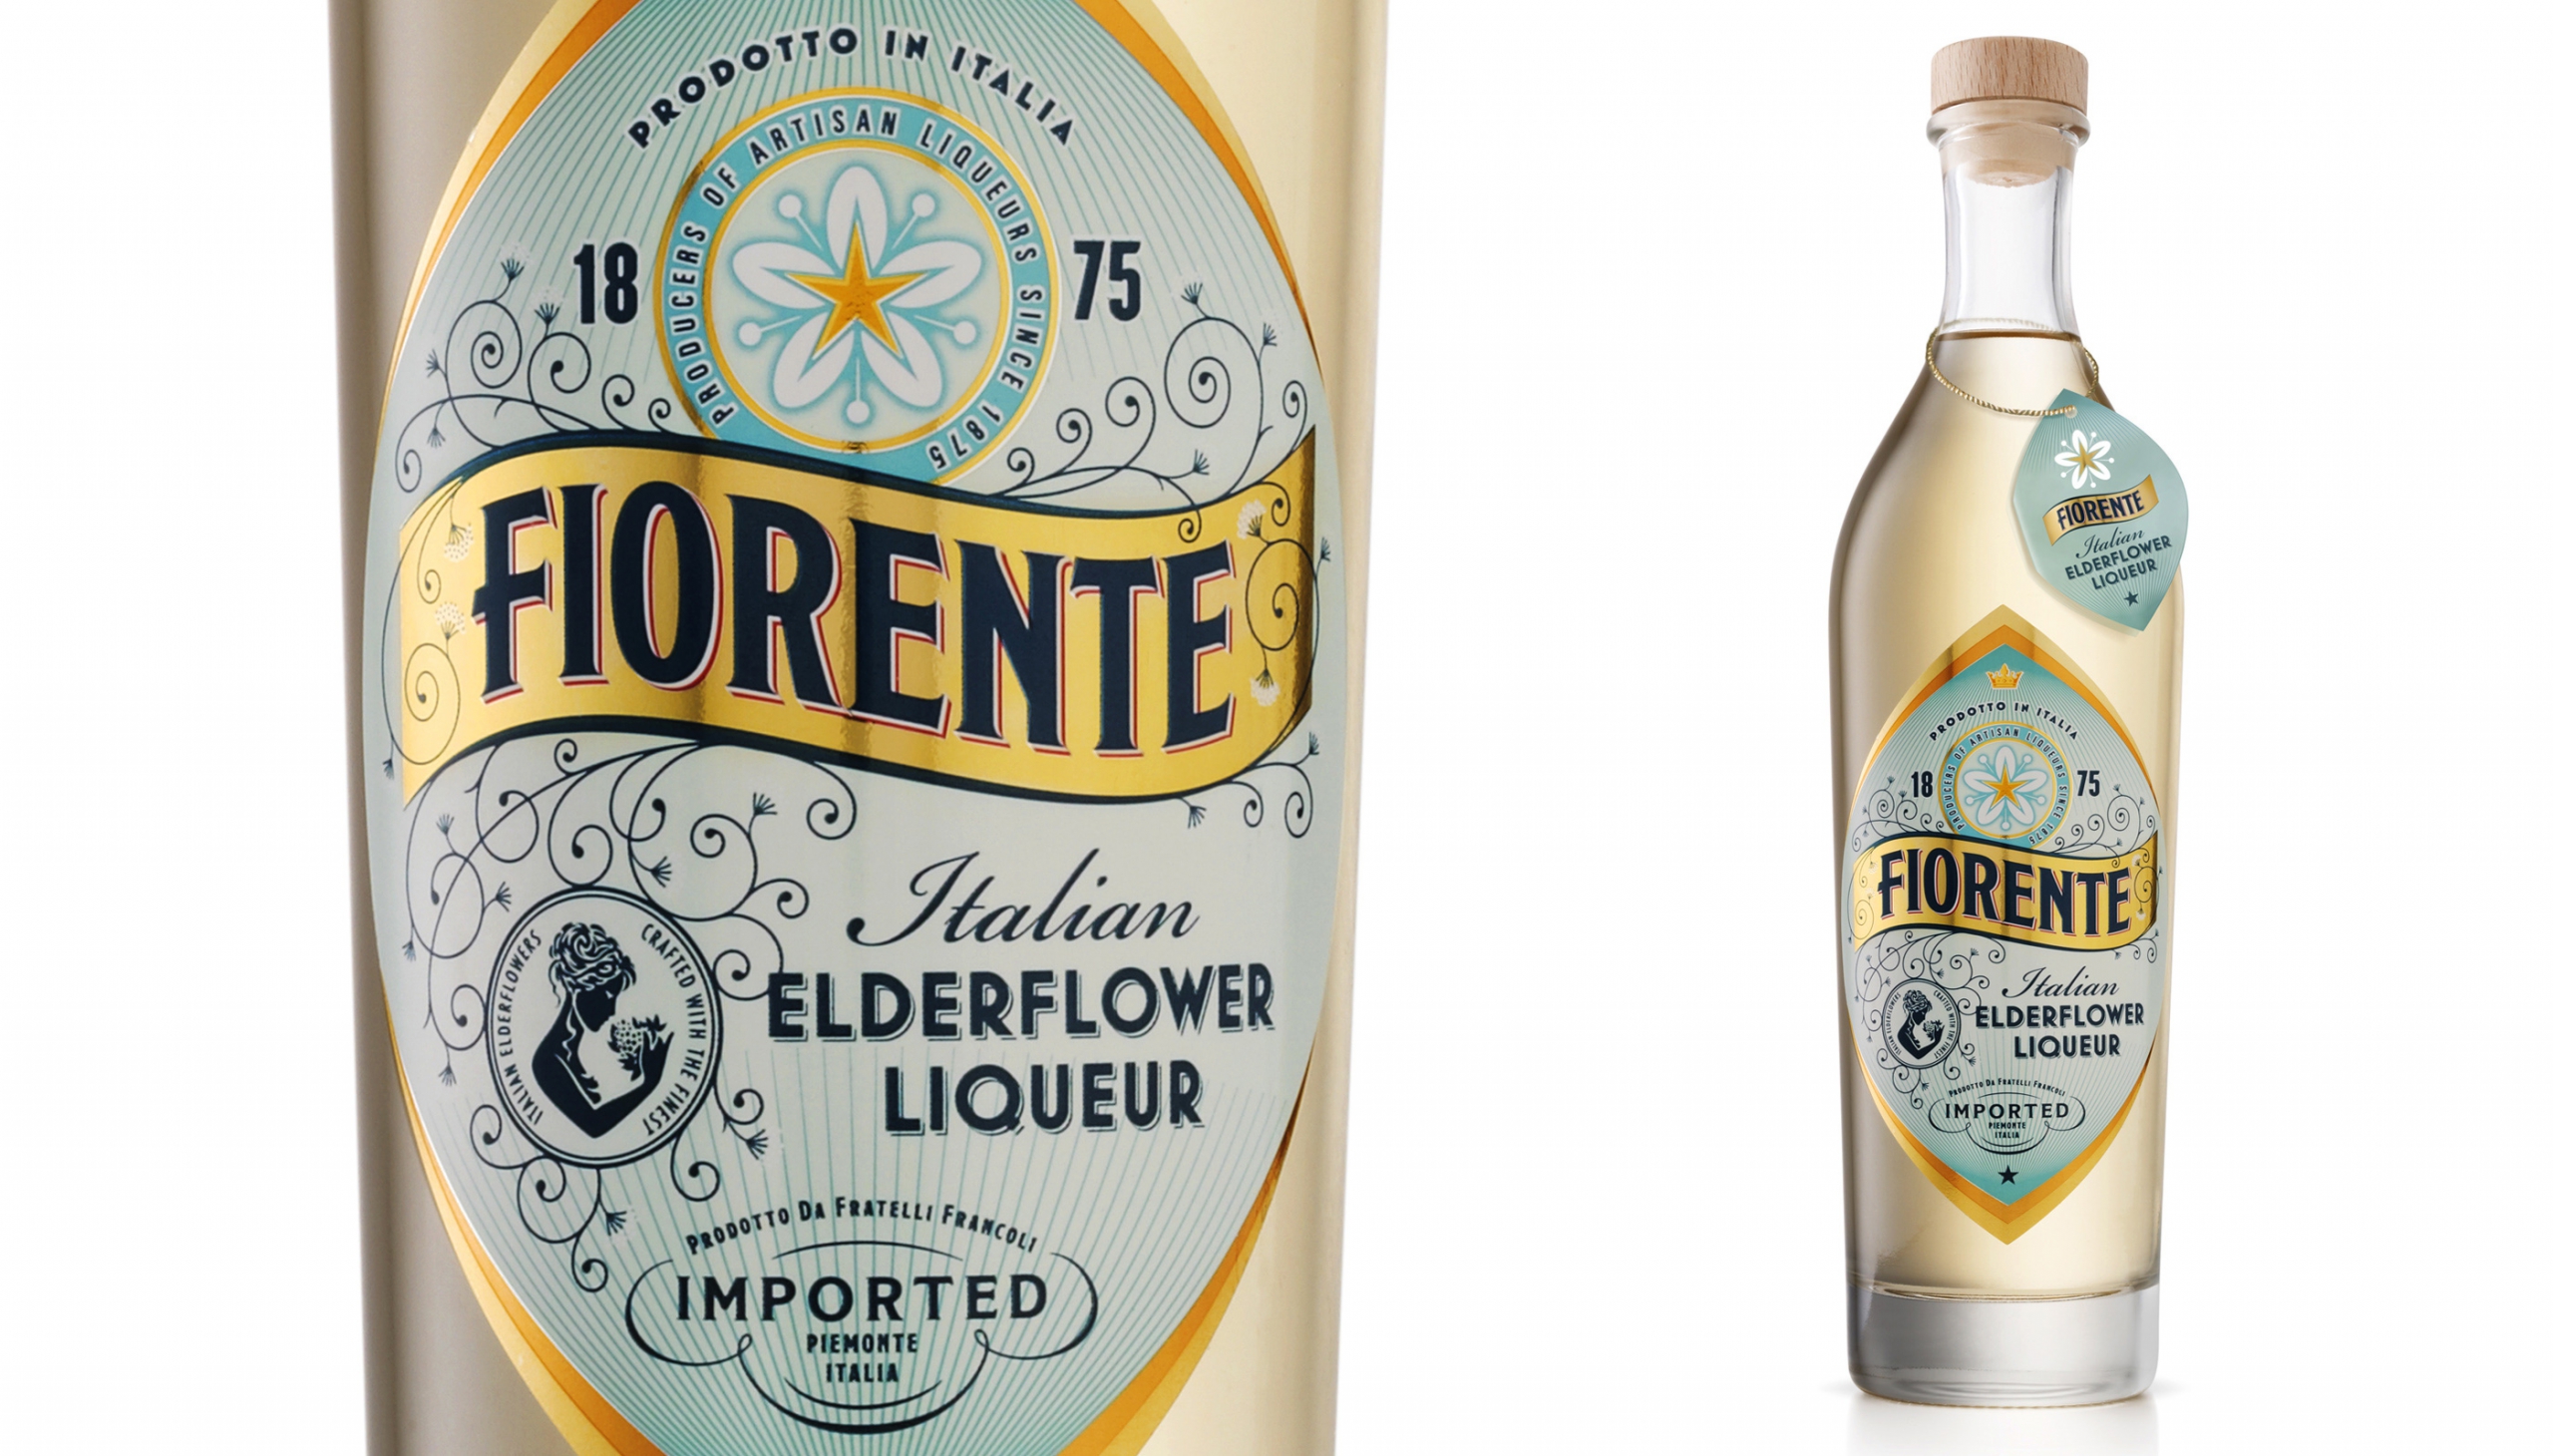 Fiorente logo and bottle design by Bile Hendry